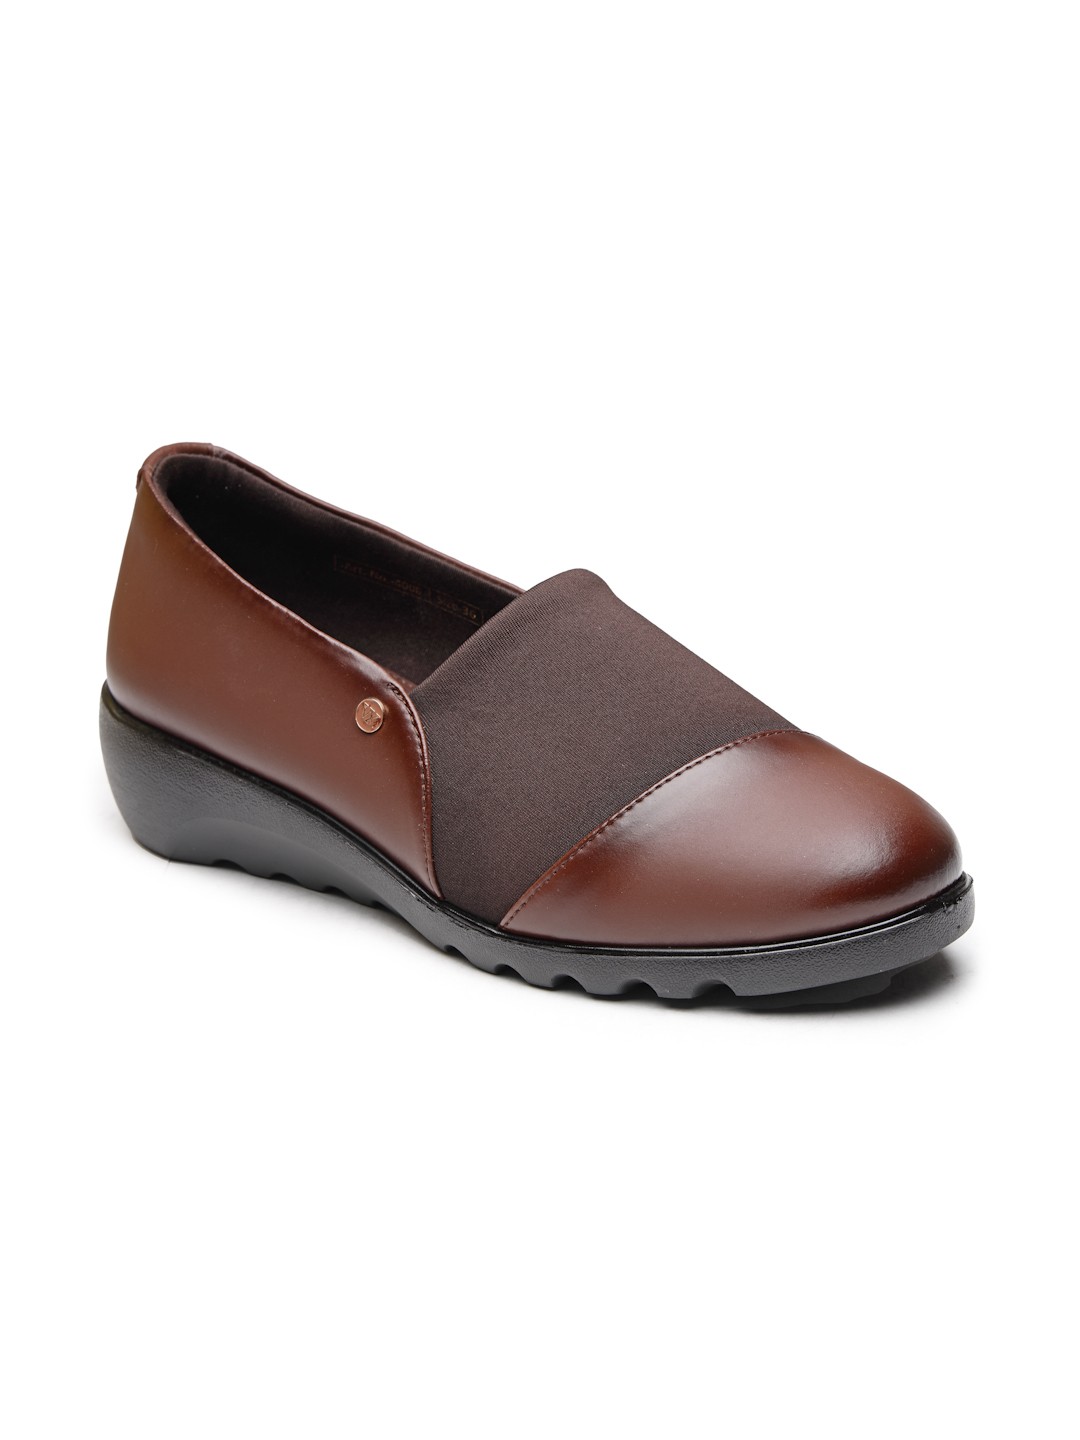 Buy Von Wellx Germany Comfort Women's Brown Casual Shoes Ayla Online in Colombo